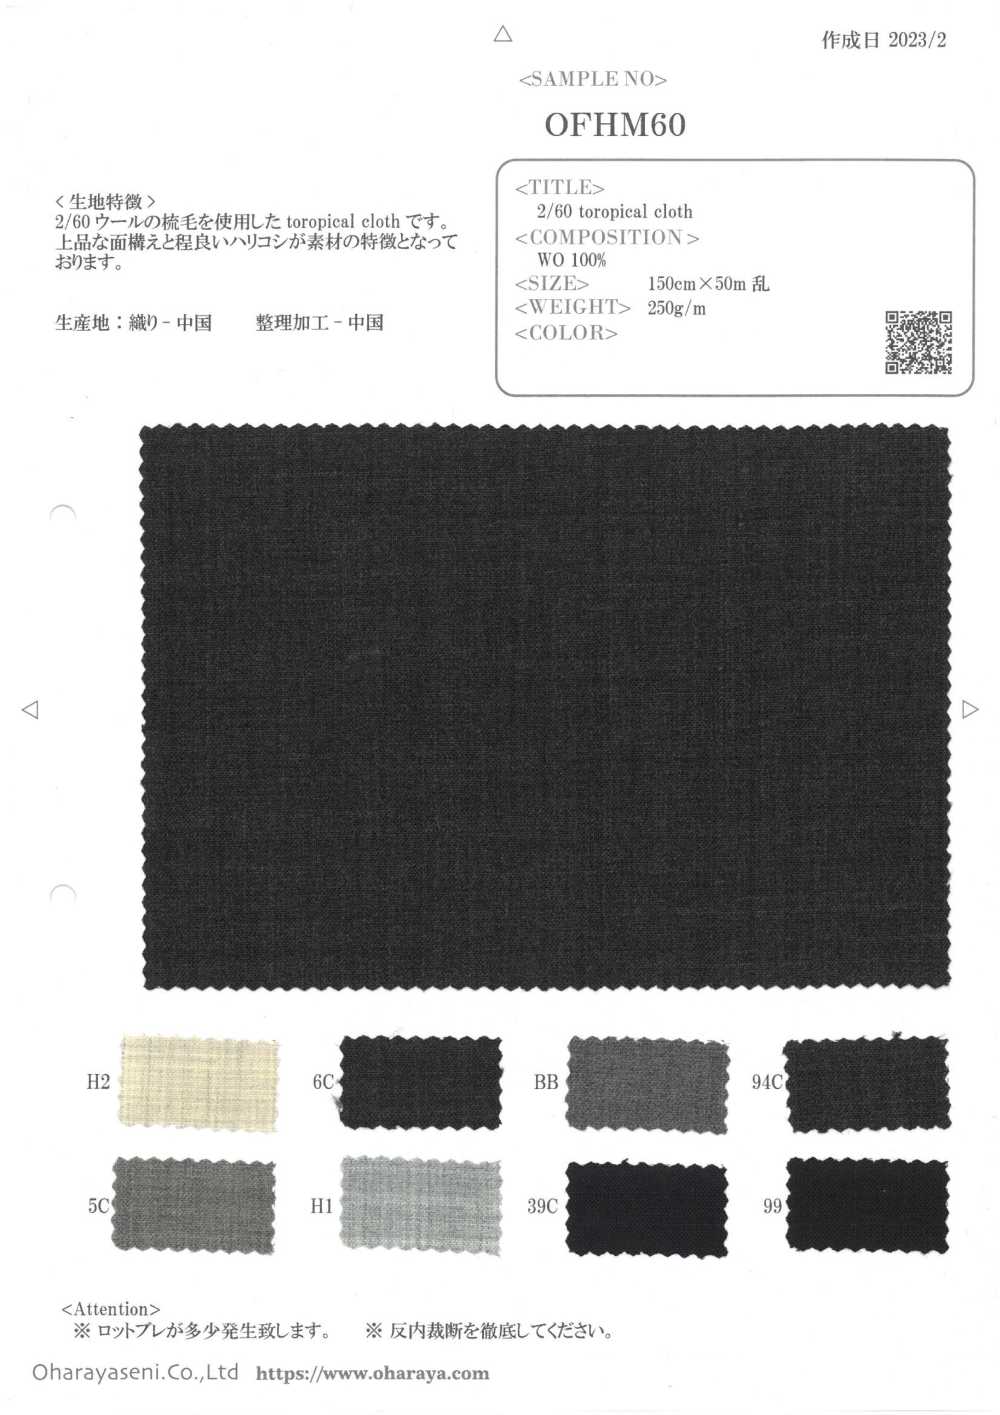 OFHM60 2/60 Tissu Tropical[Fabrication De Textile] Oharayaseni